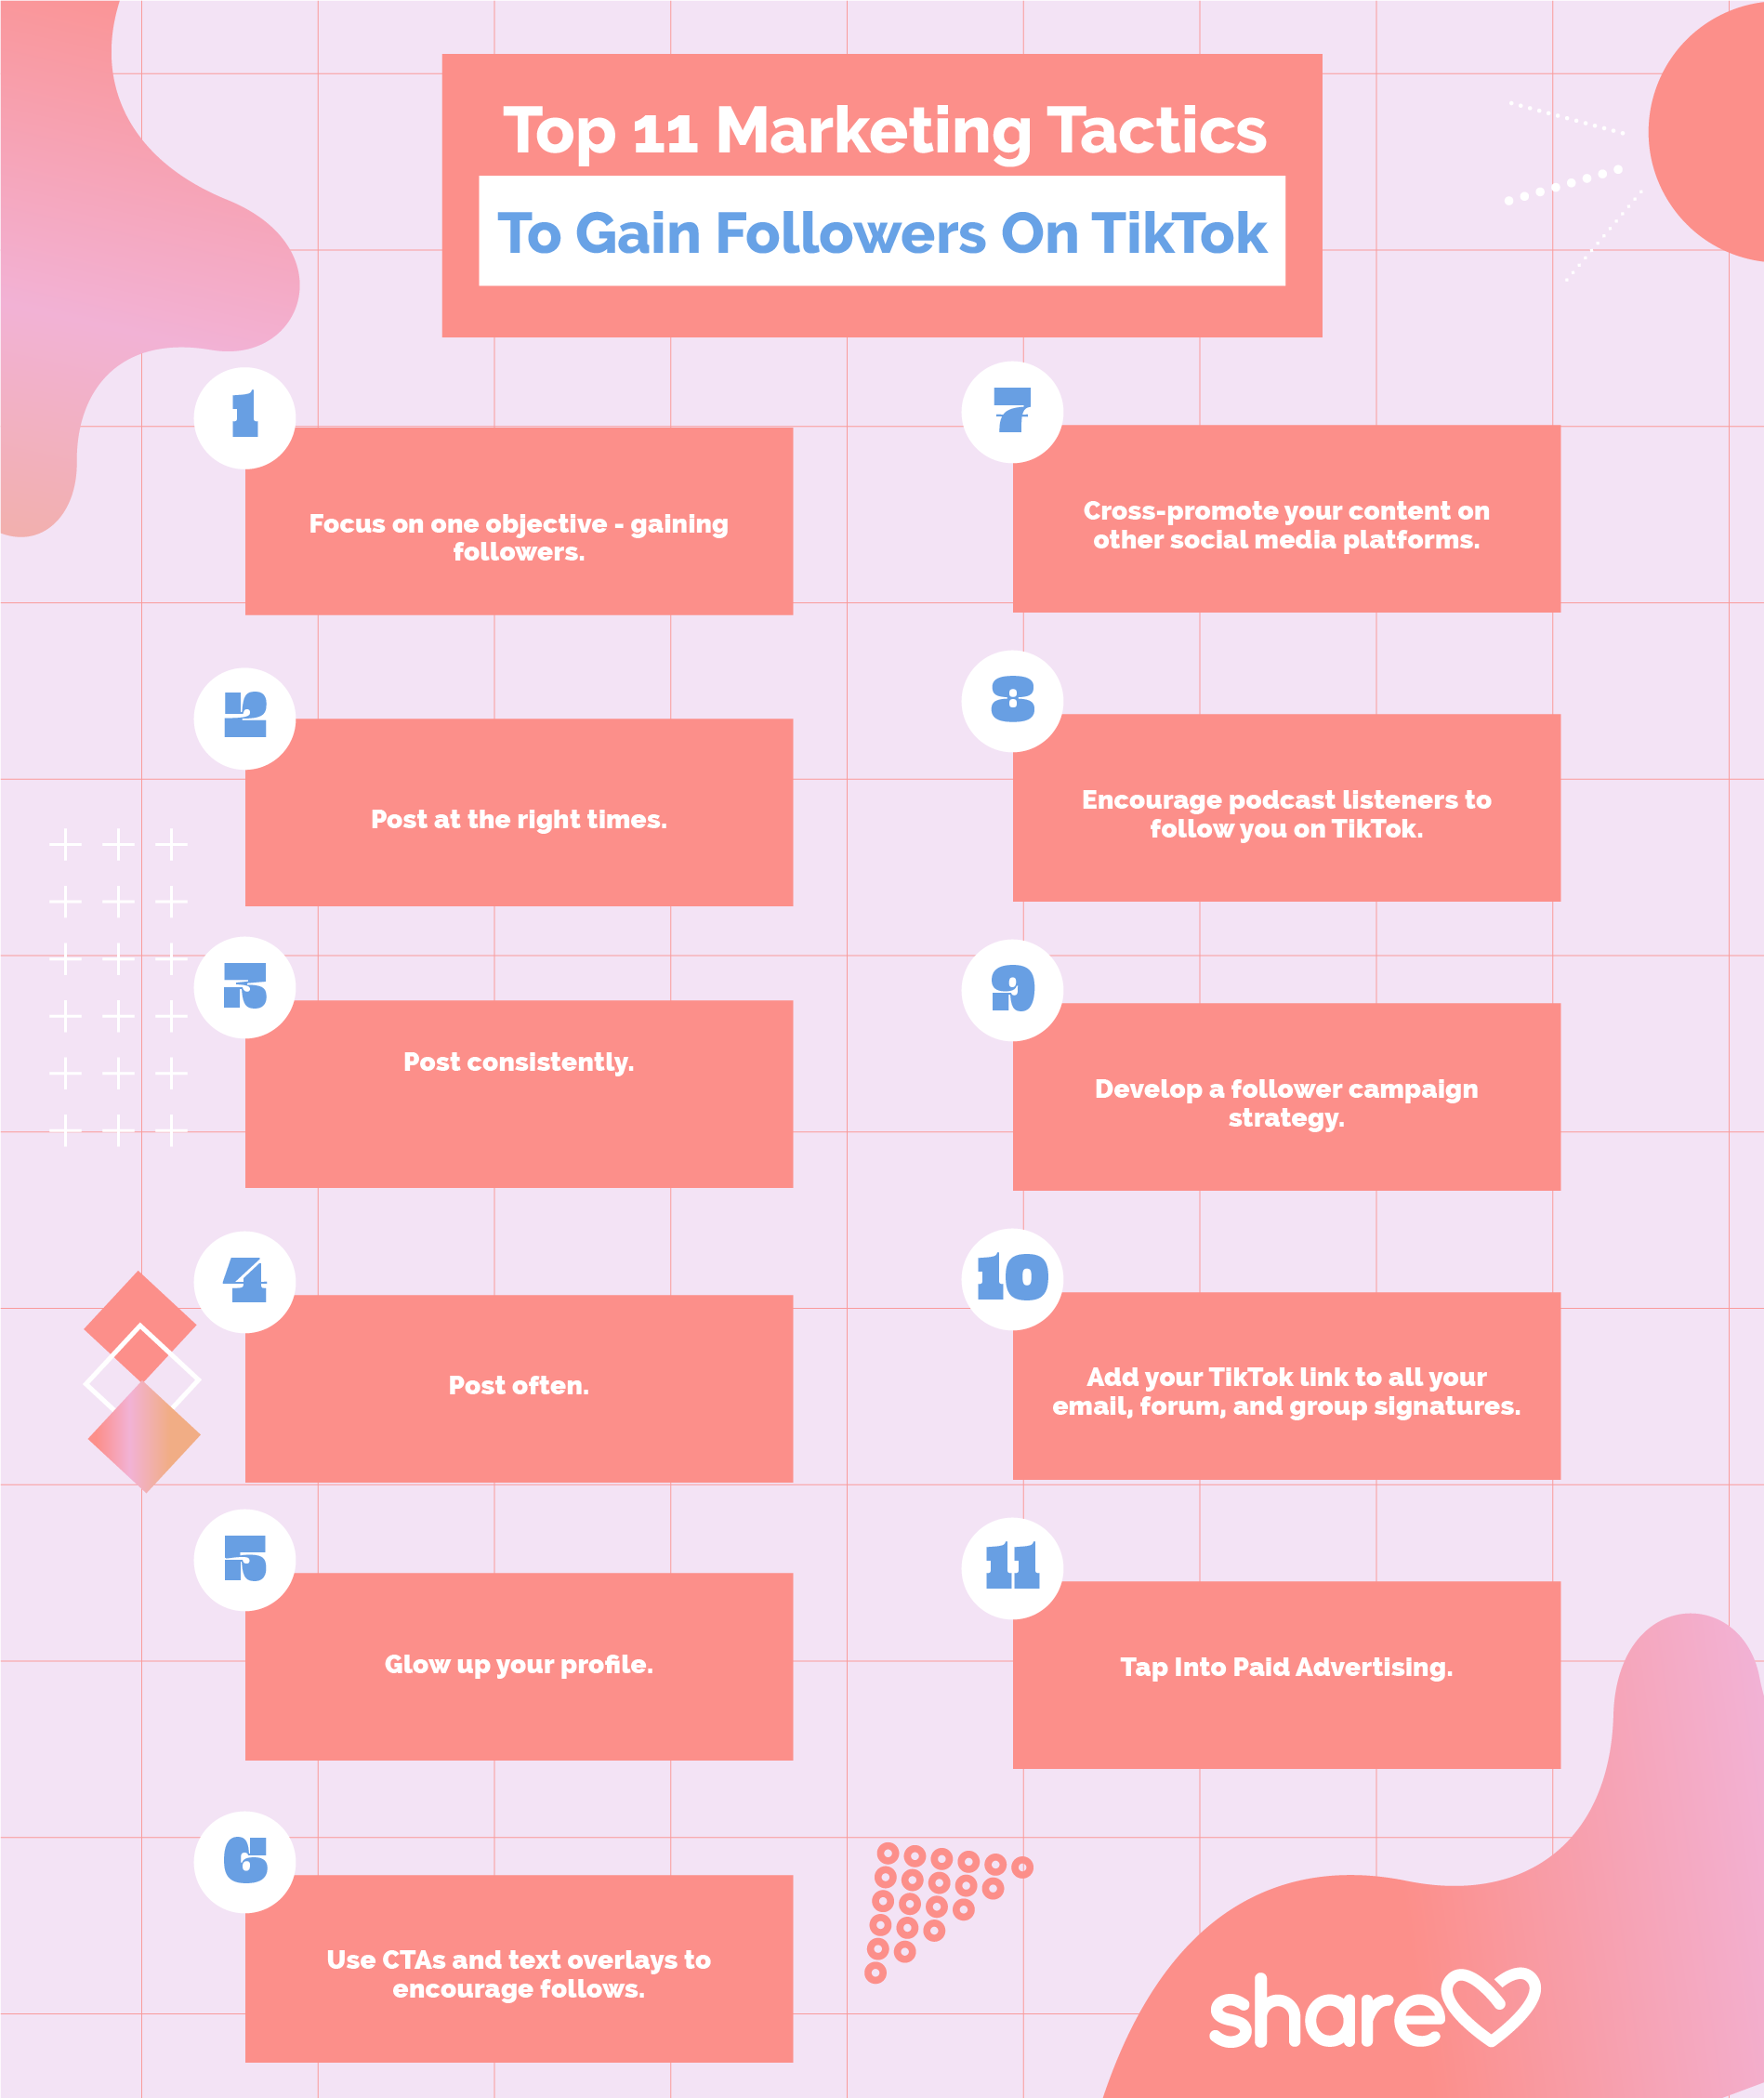 Top marketing tacttics to gain followers on TiktTok